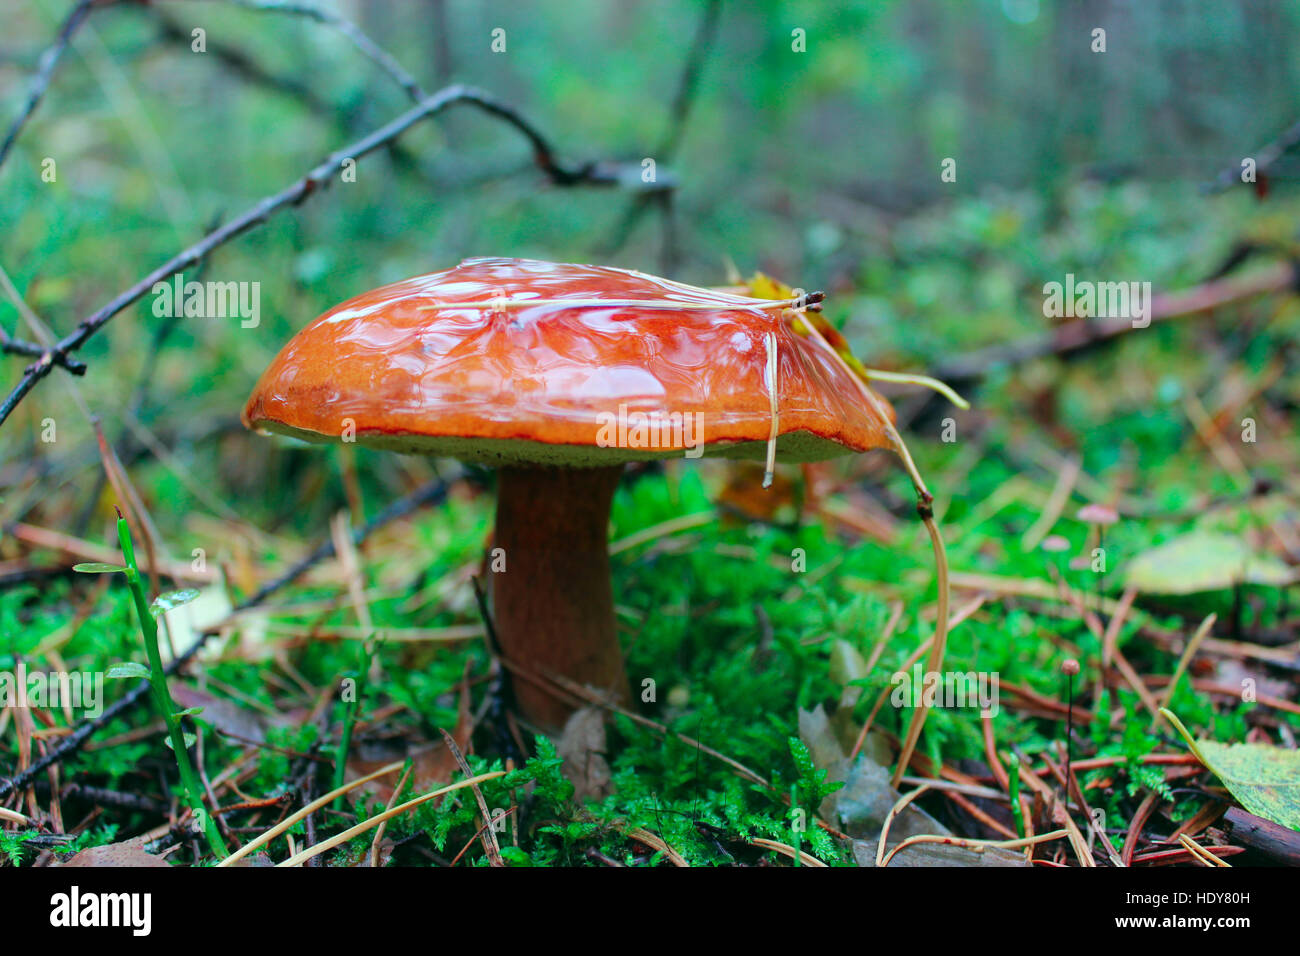 beautiful mushroom of Suillus in the Autumn forest Stock Photo